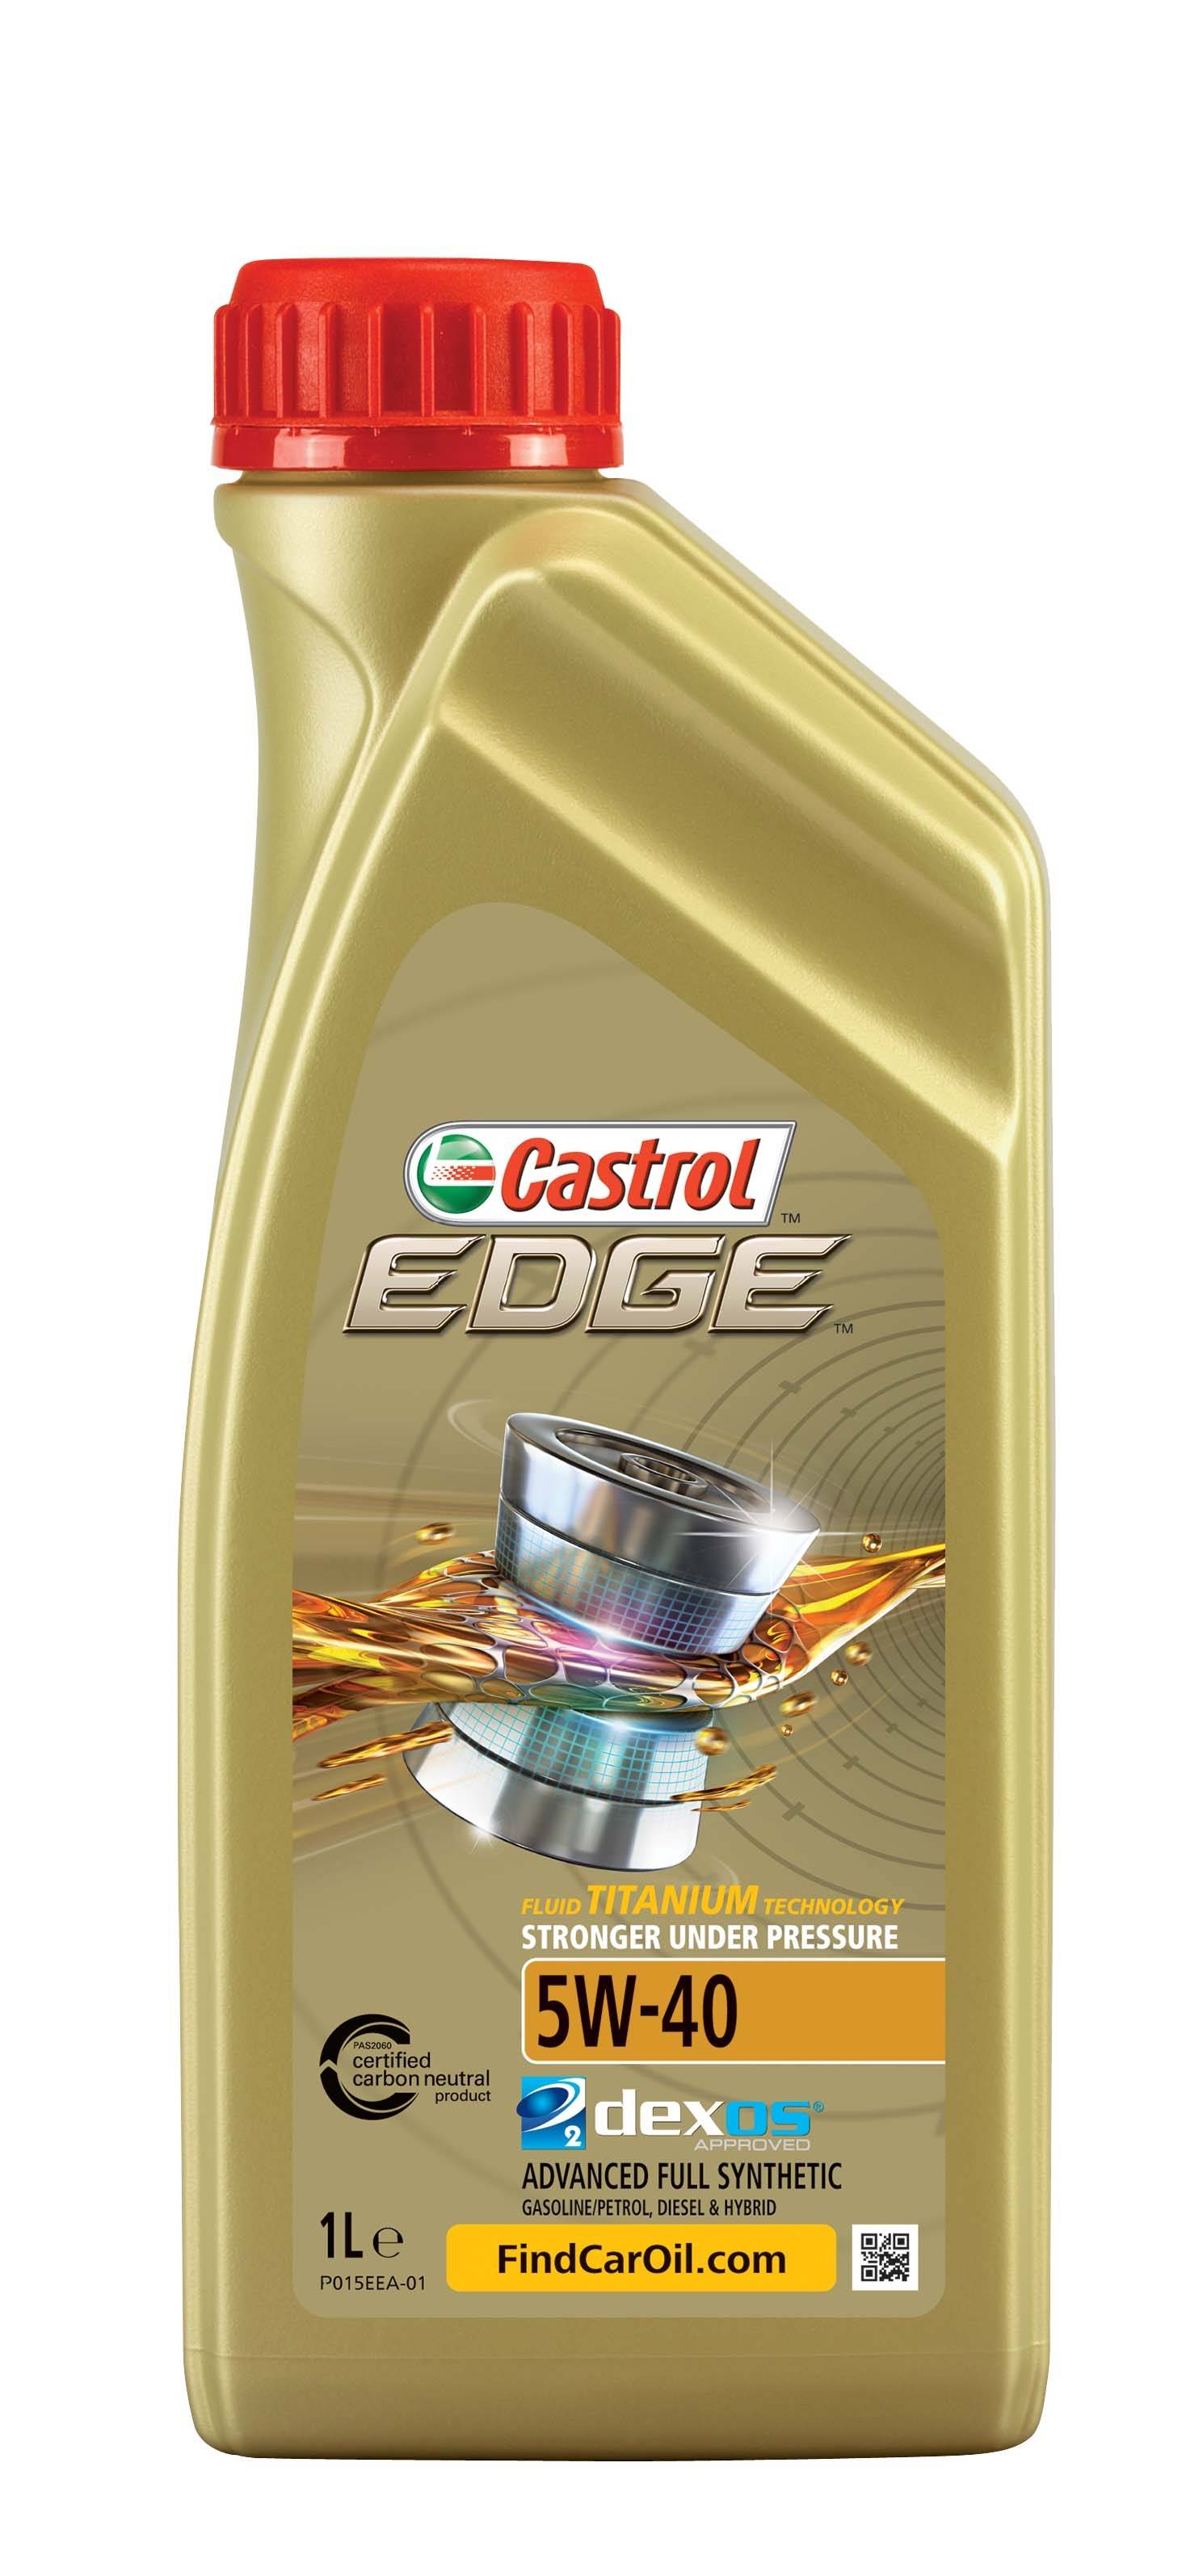 фото Castrol масло castrol edge 5w-40(1л)